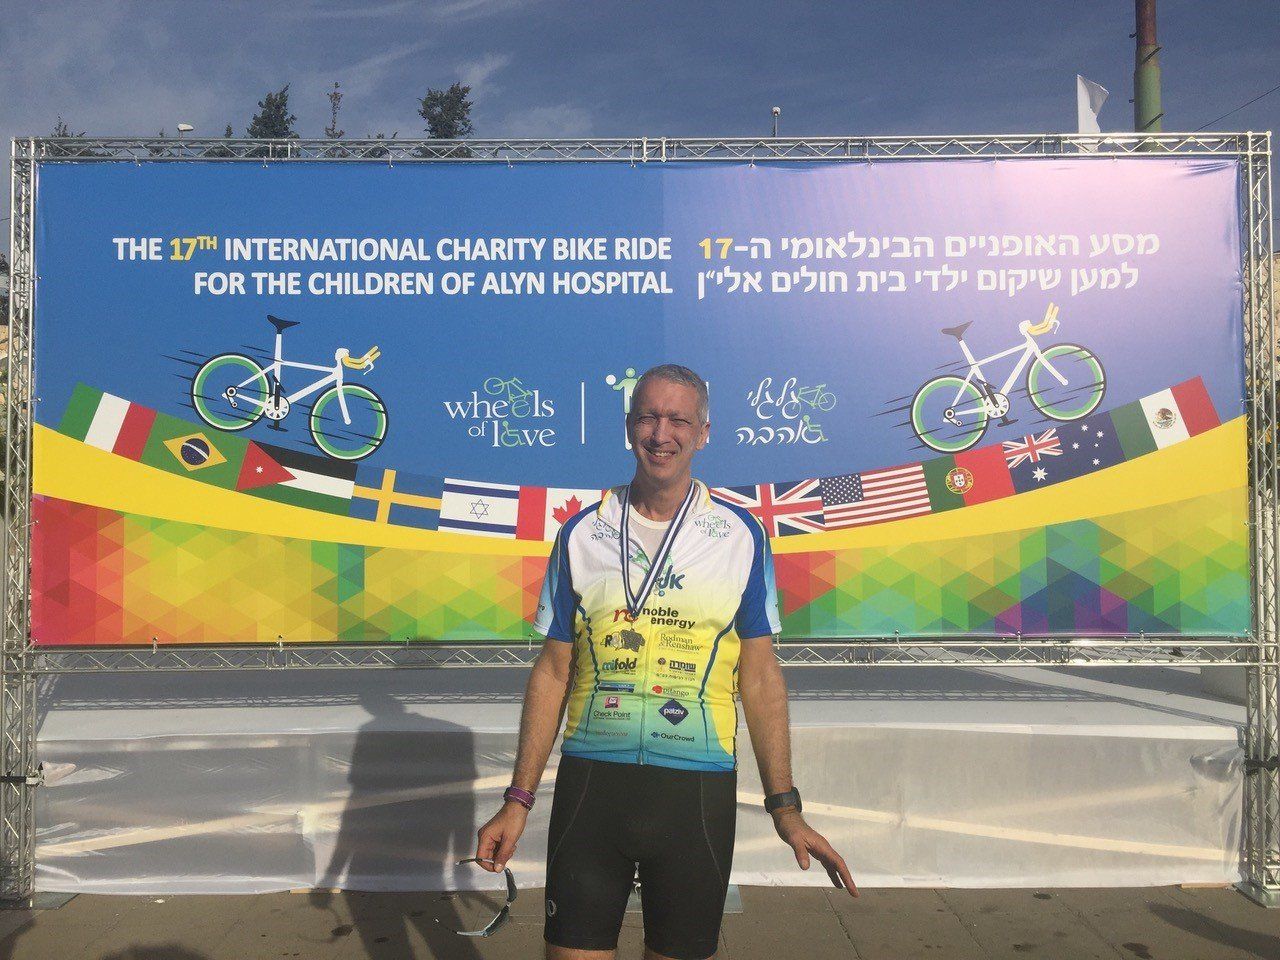 Alex Dembitzer taking part in the 17th international charity bike ride